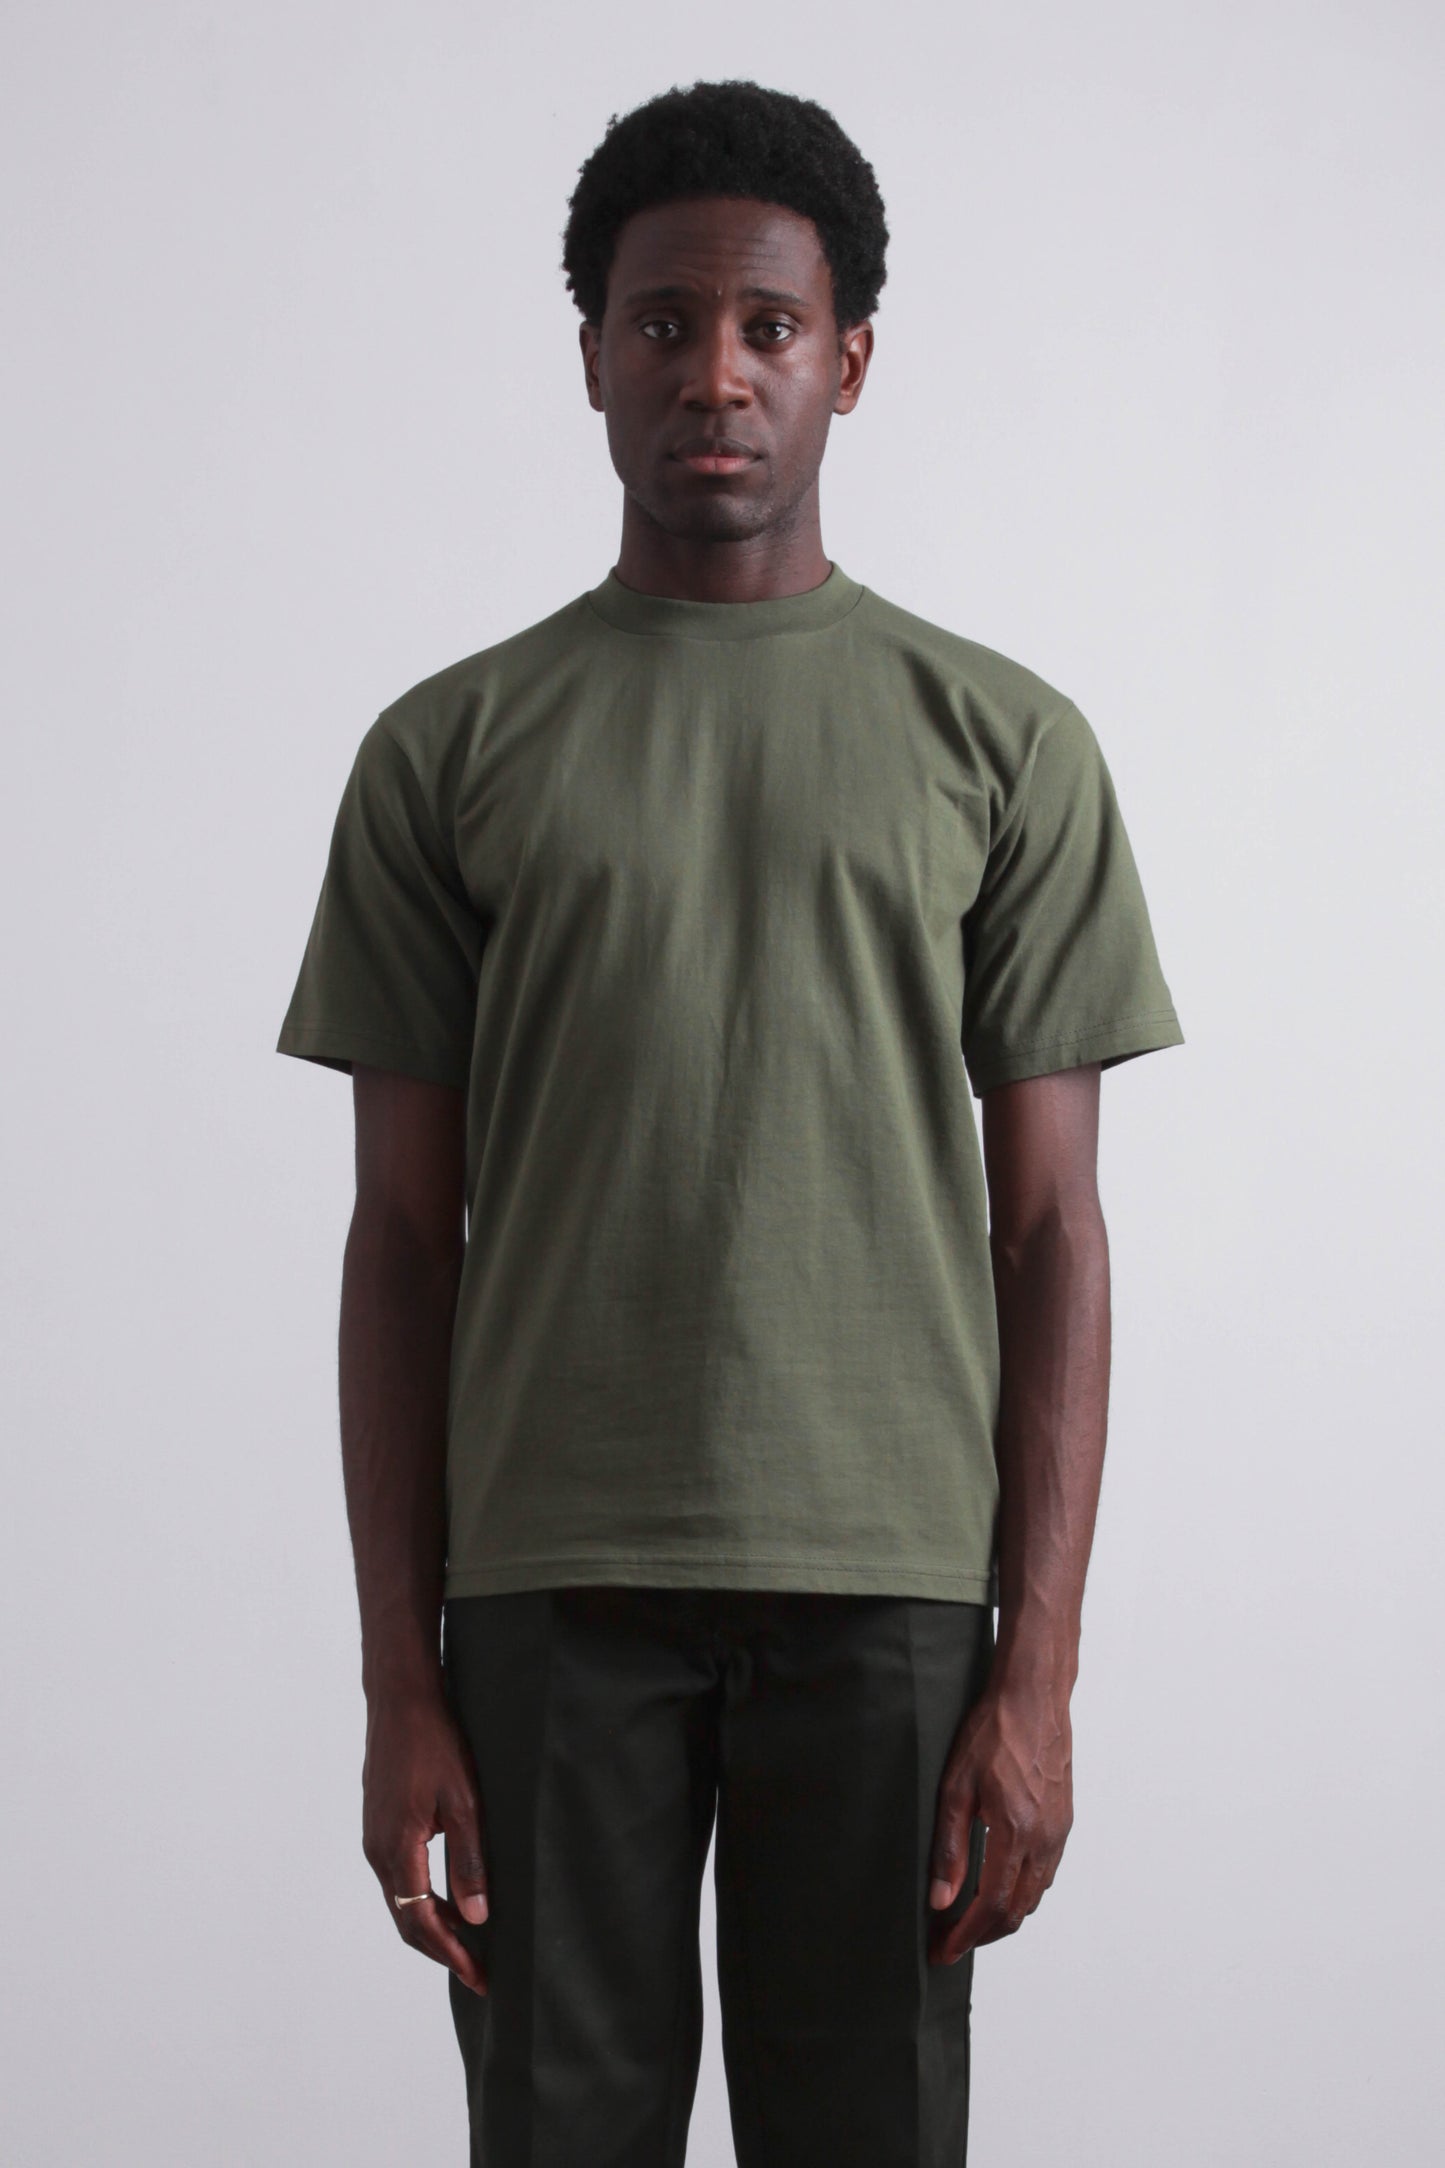 Heavyweight T-Shirt Olive Green